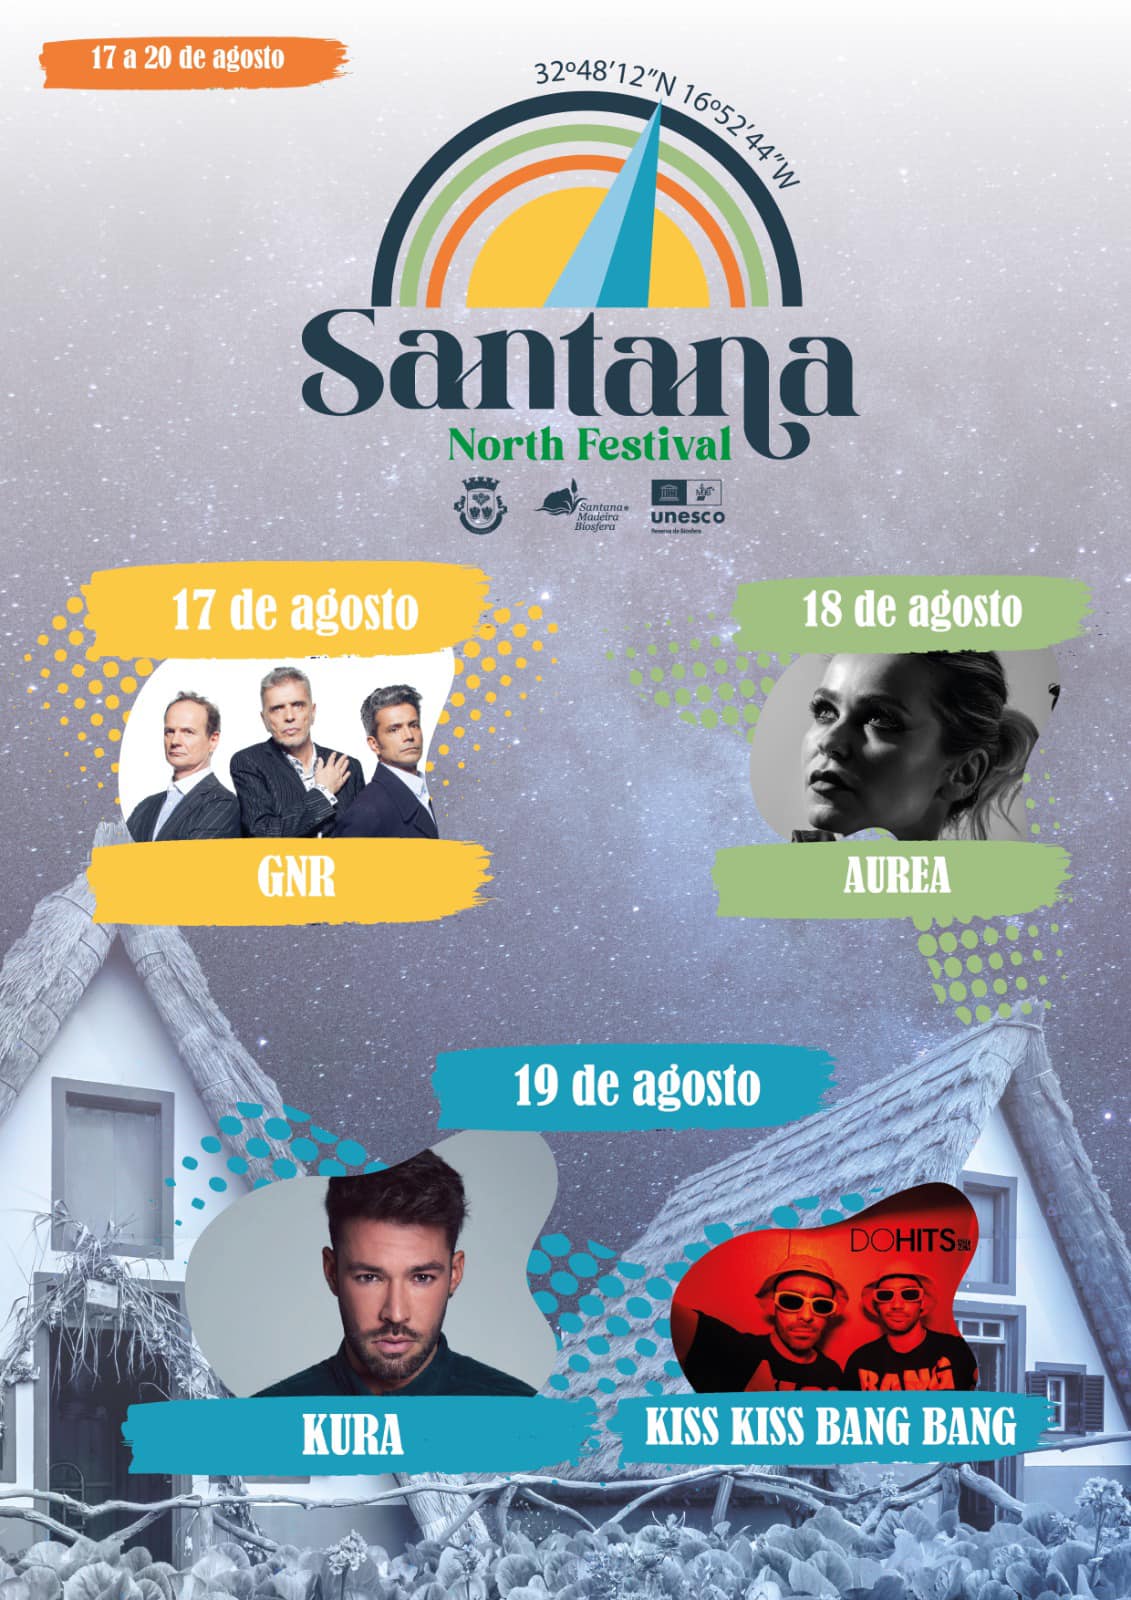 Agenda_Santana_North_Festival